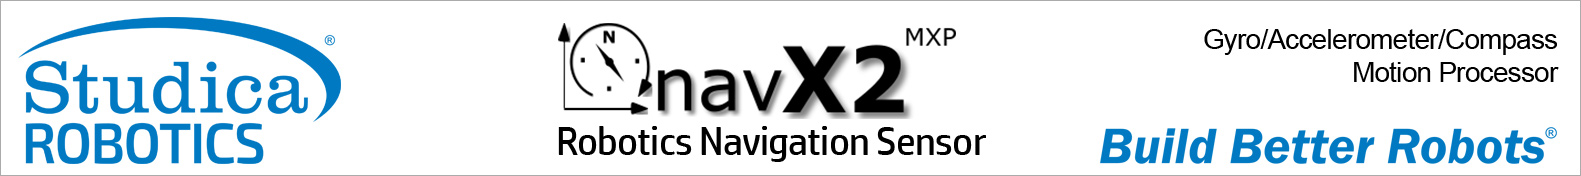 navX-MXP